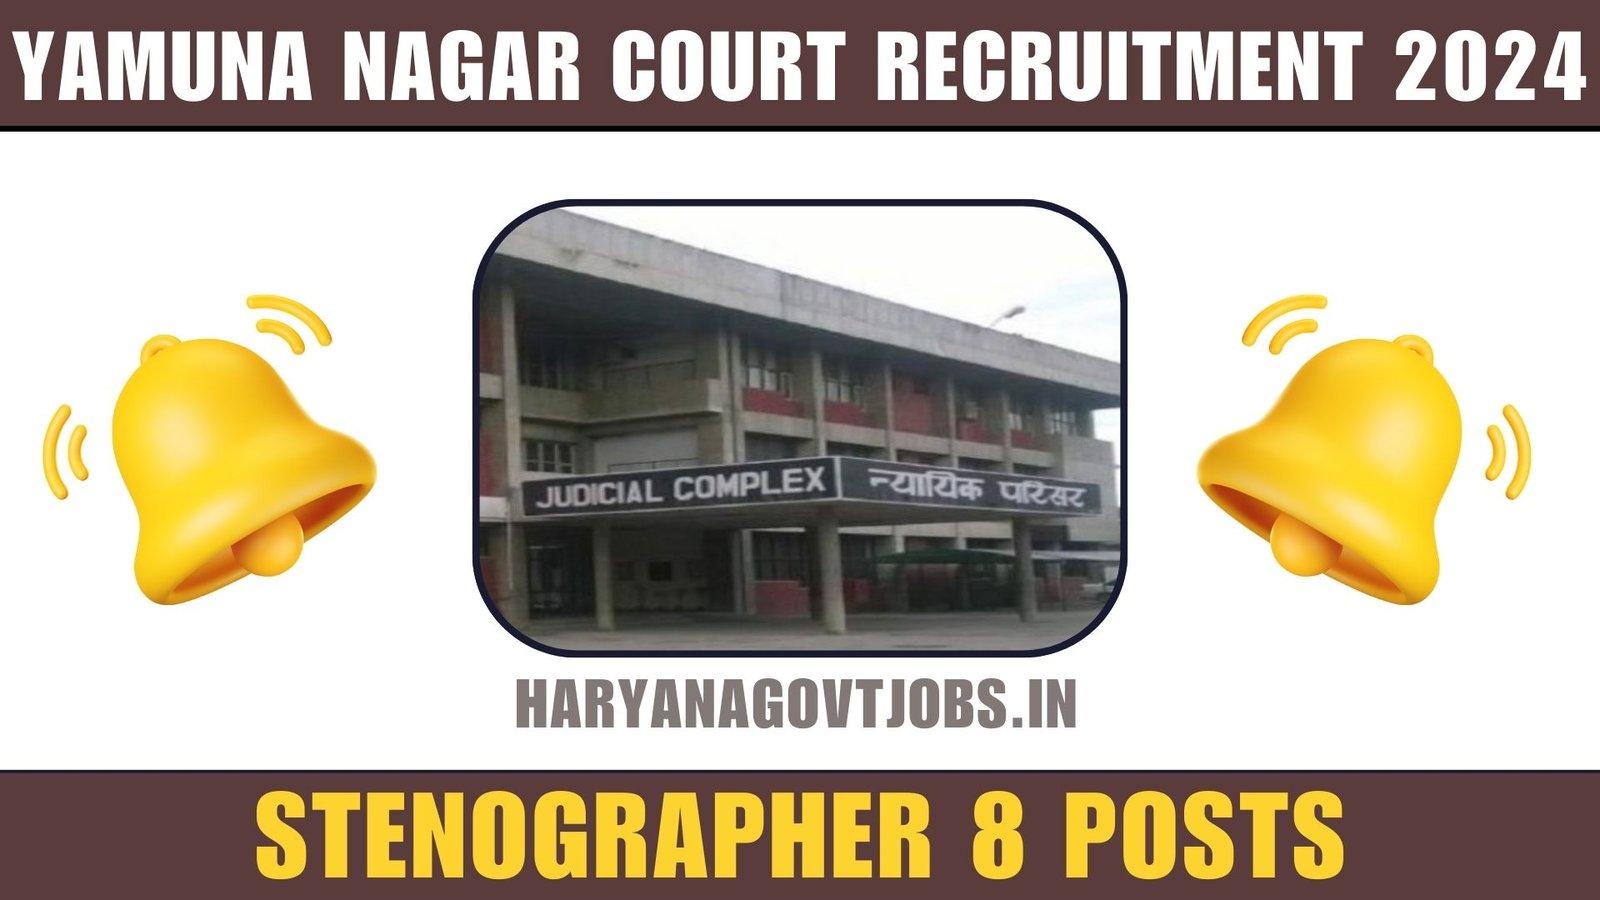 Yamuna Nagar Court Recruitment 2024 Short Information